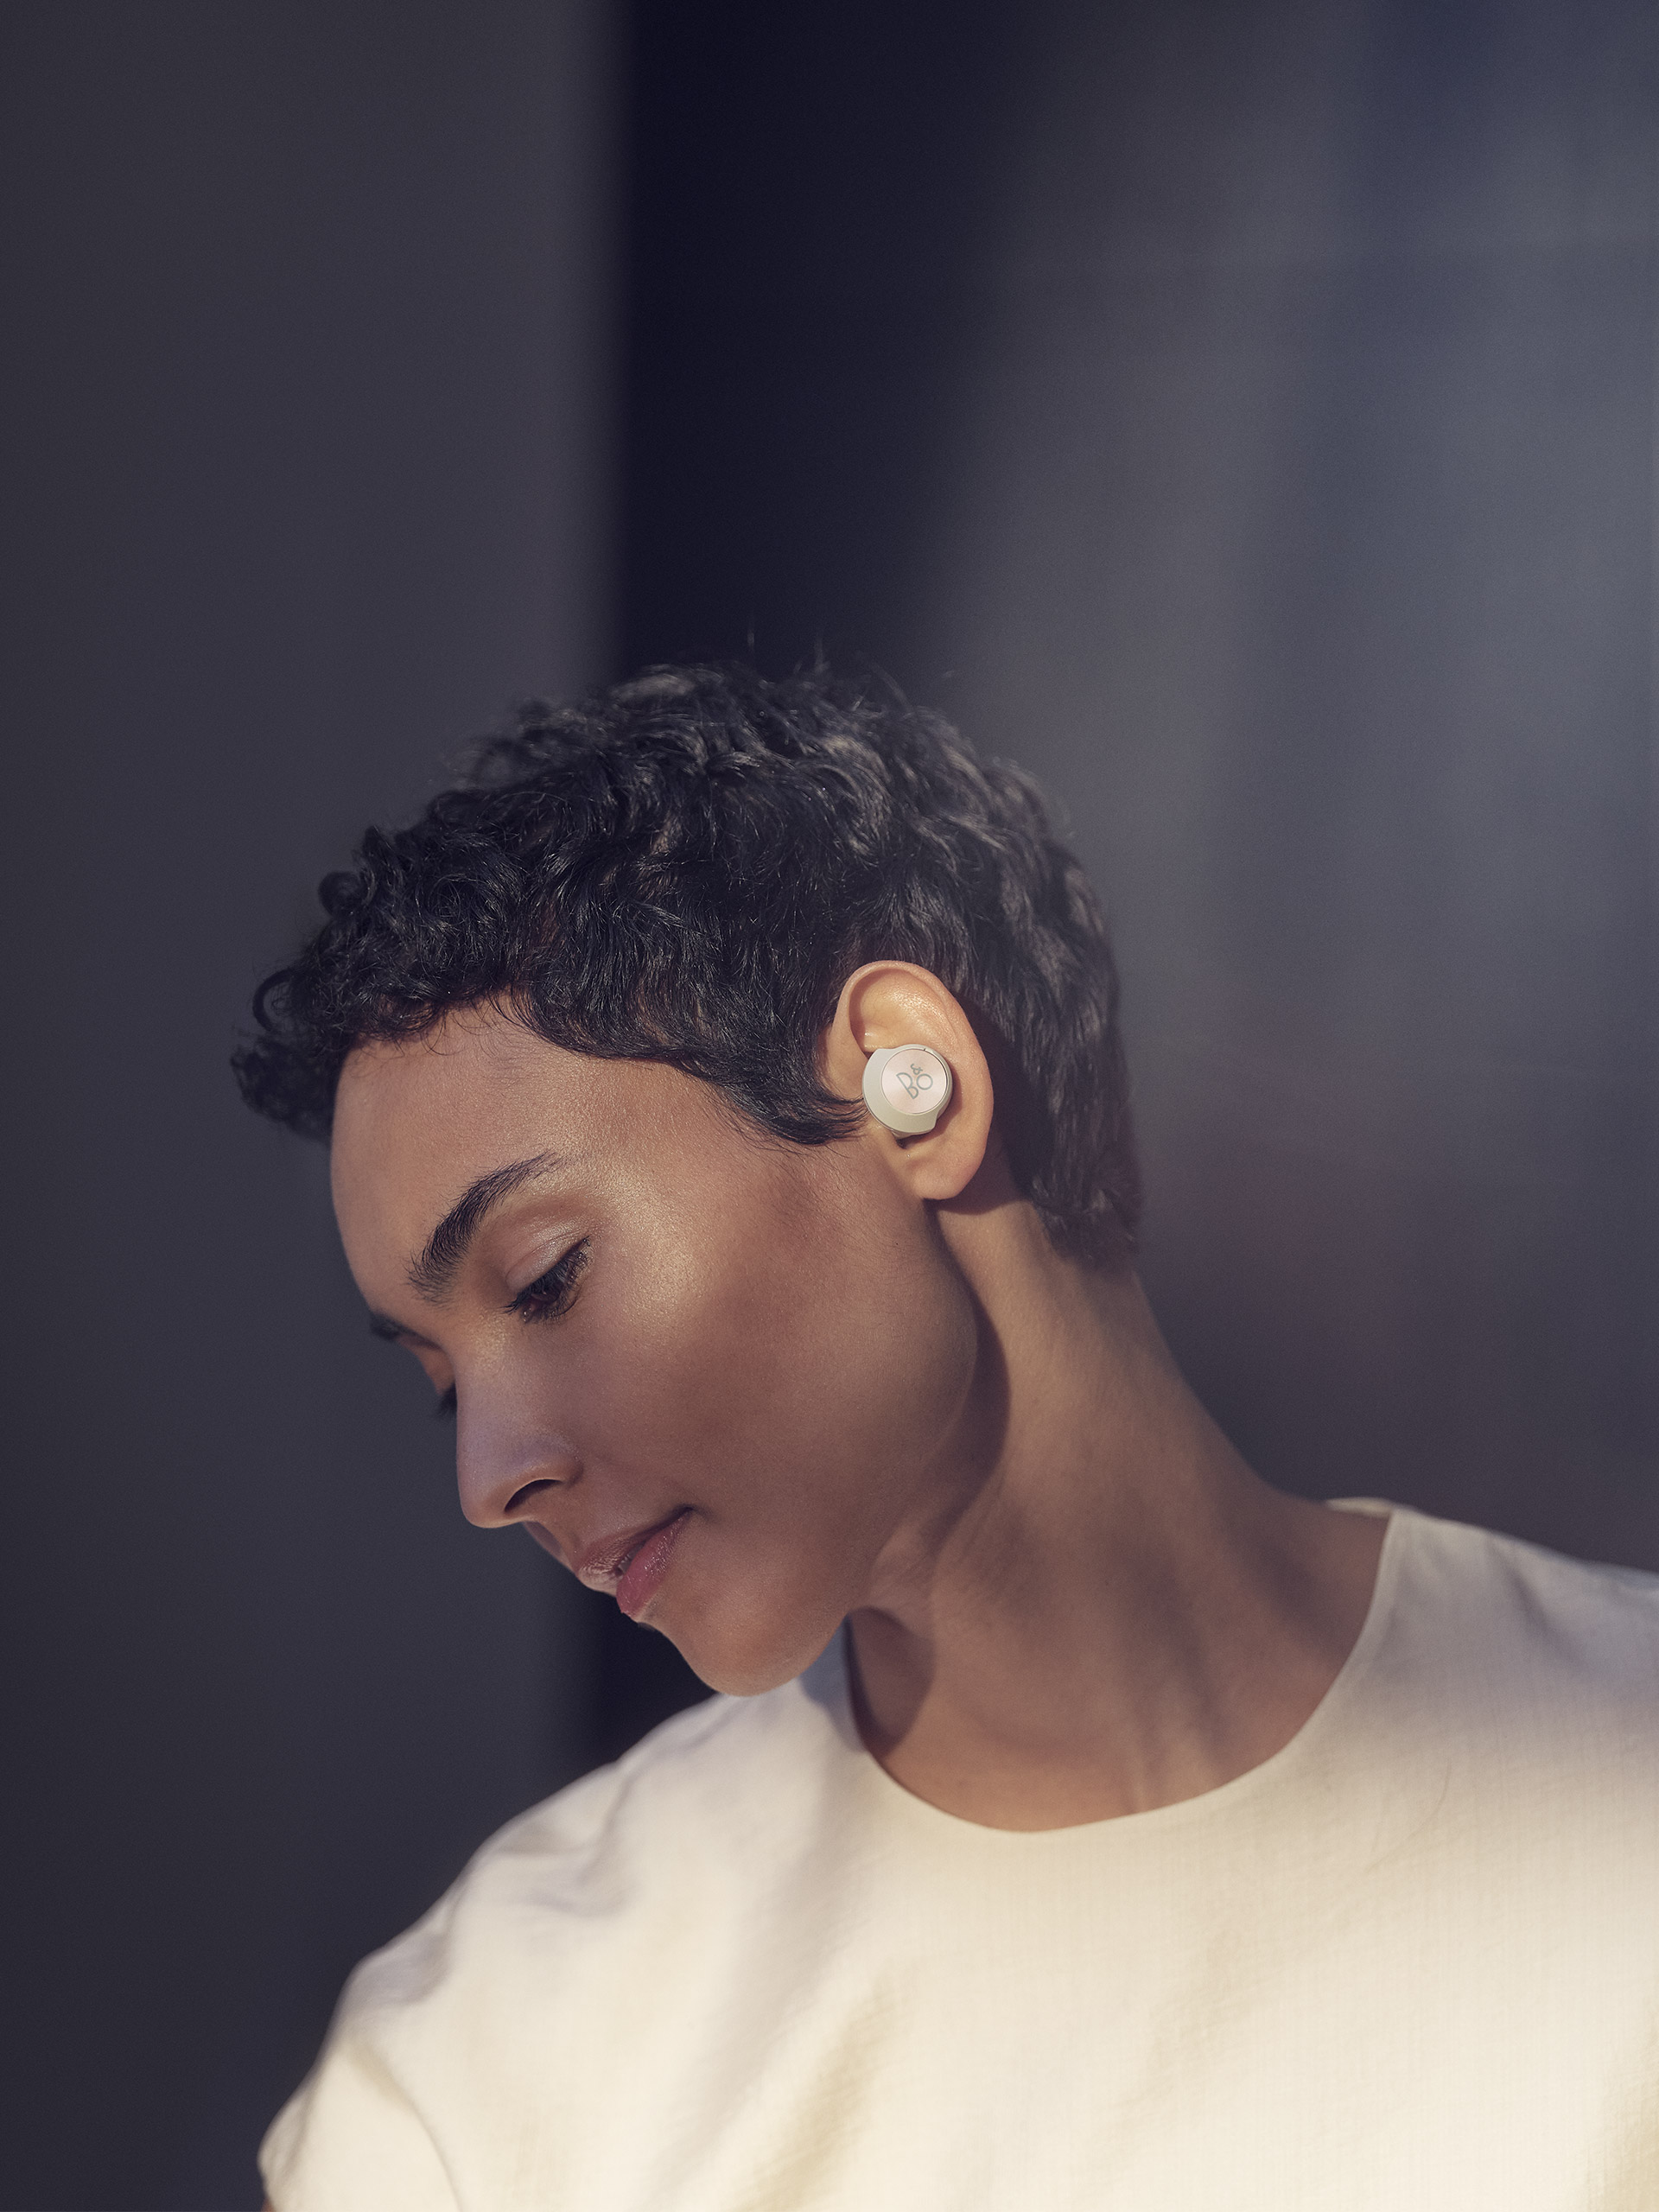 Review: Bang & Olufsen Beoplay EQ earphones